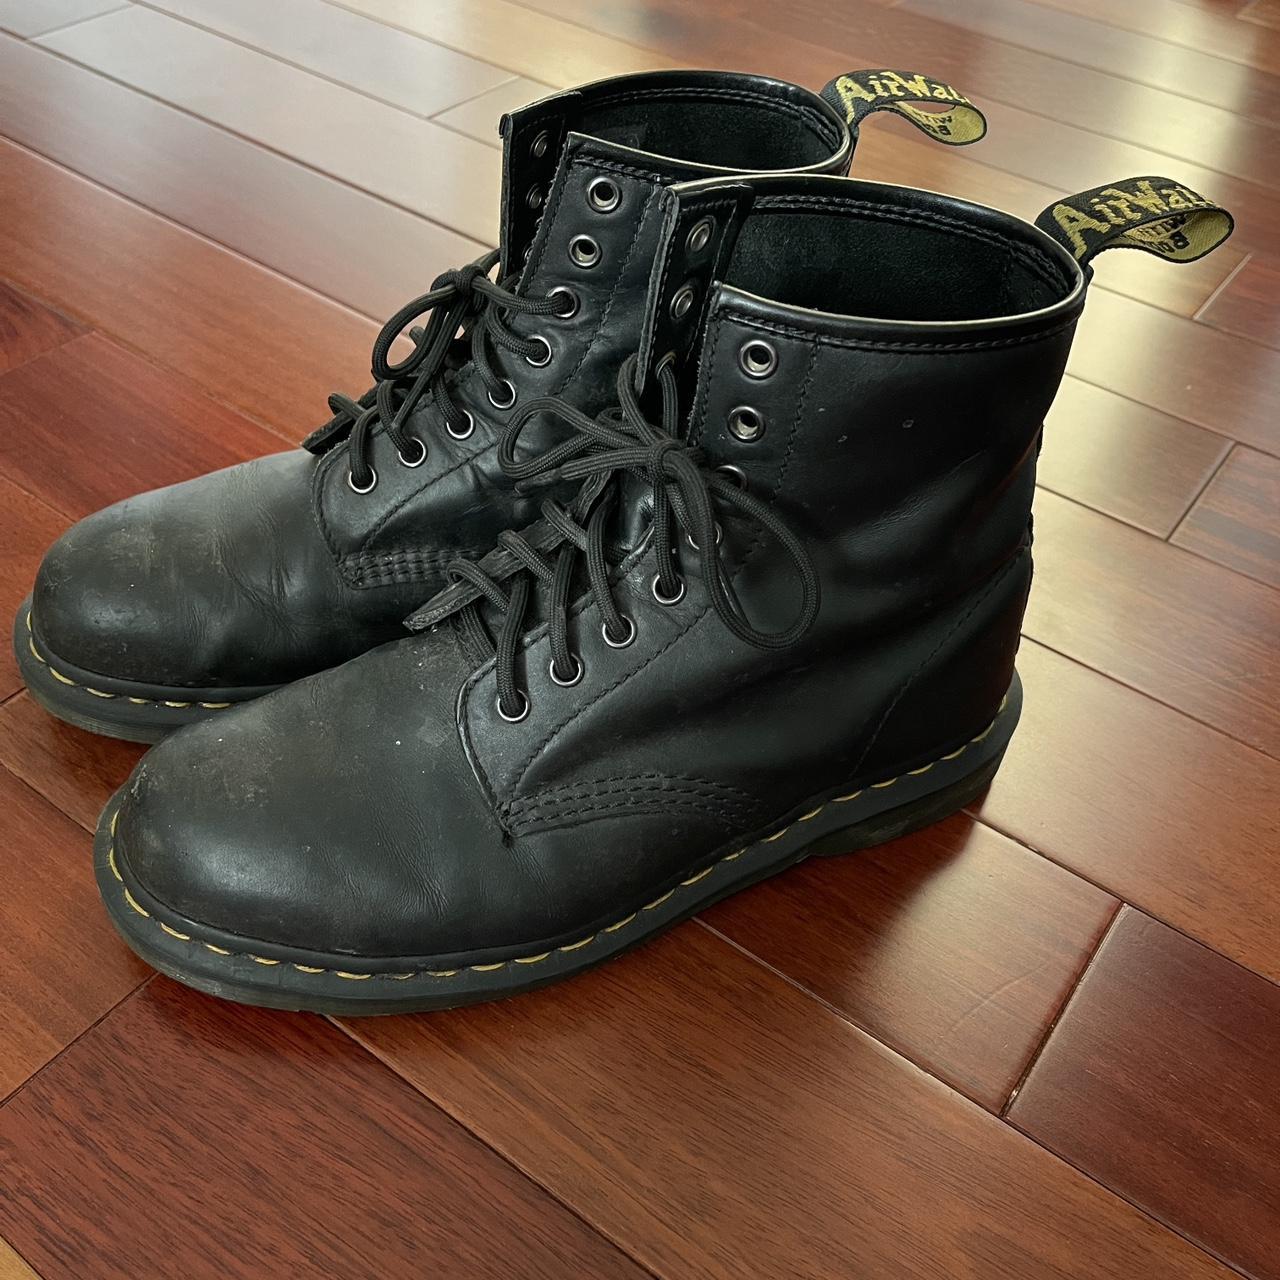 Dr. Martens Men's Black Boots